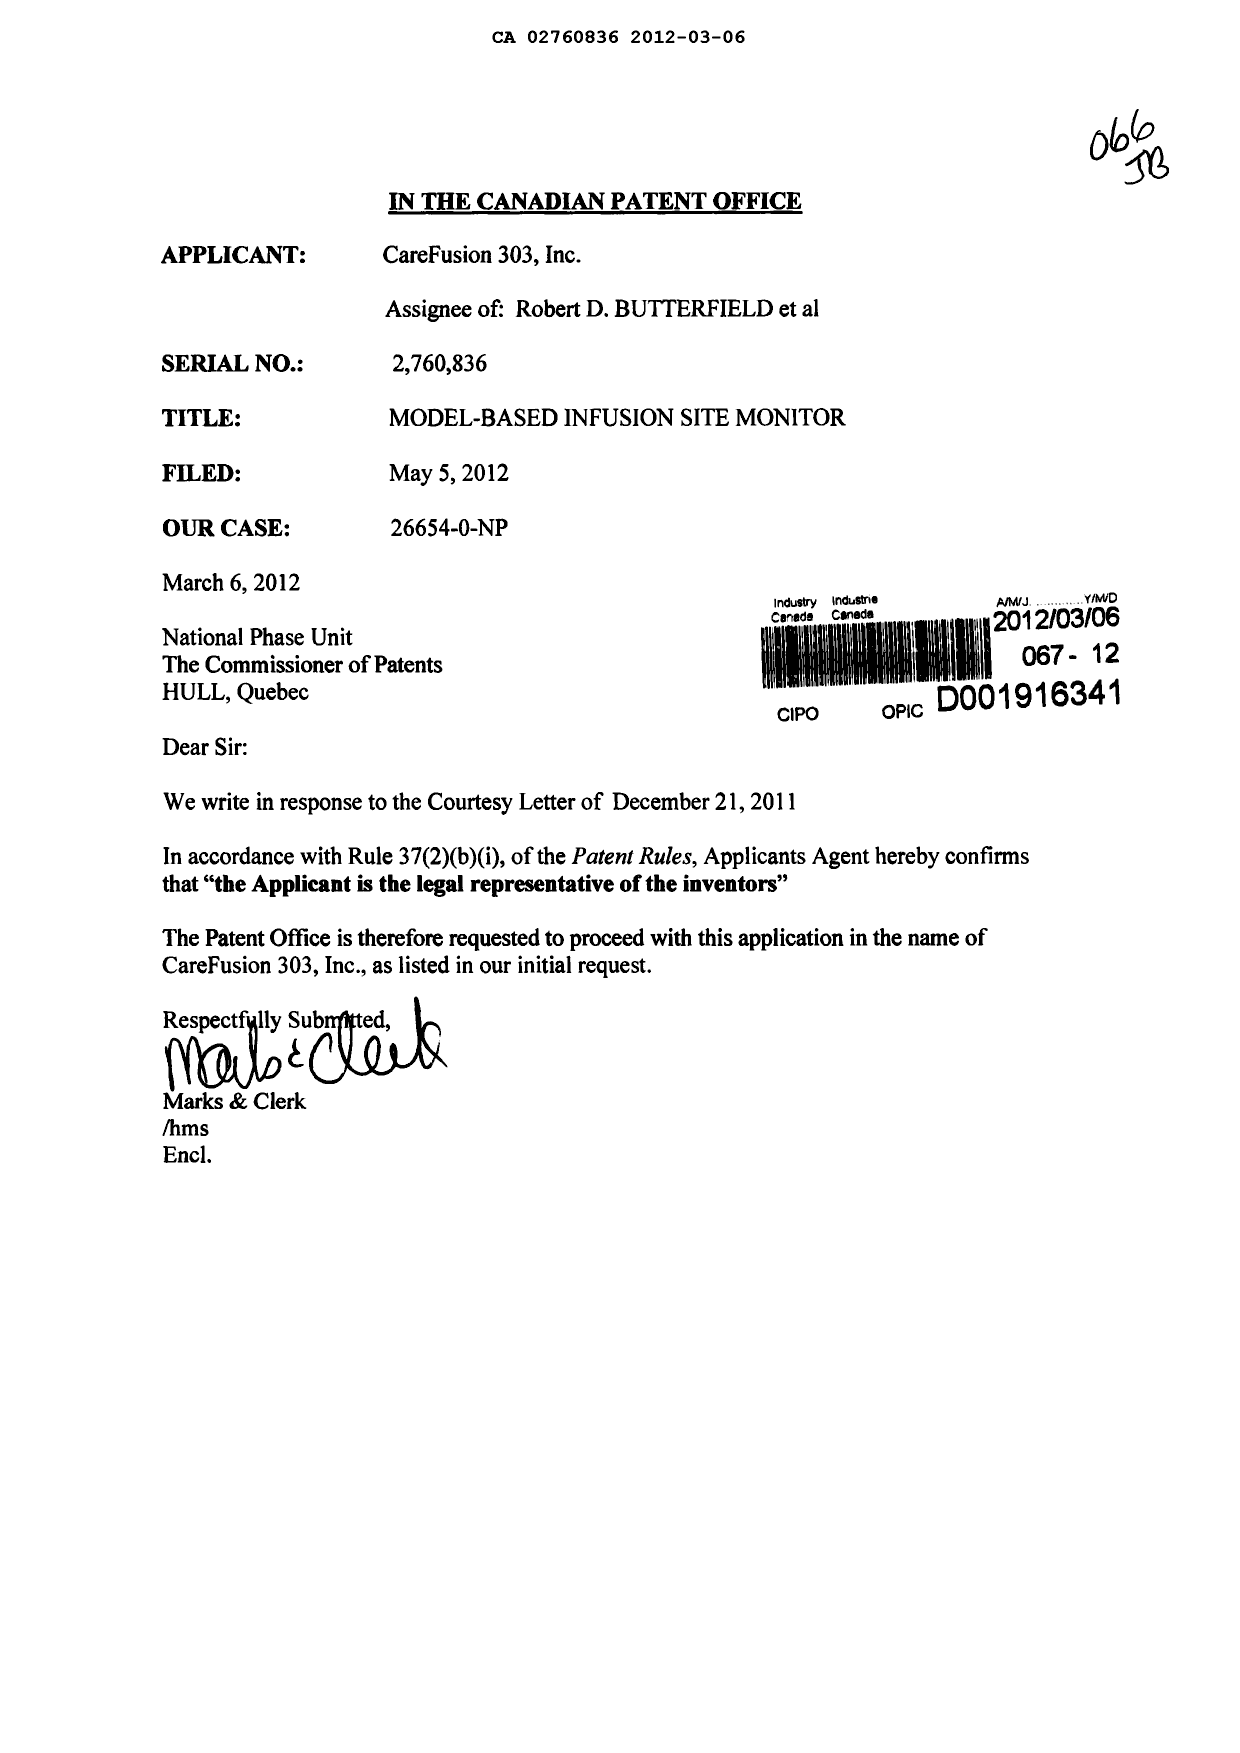 Canadian Patent Document 2760836. Correspondence 20120306. Image 1 of 1